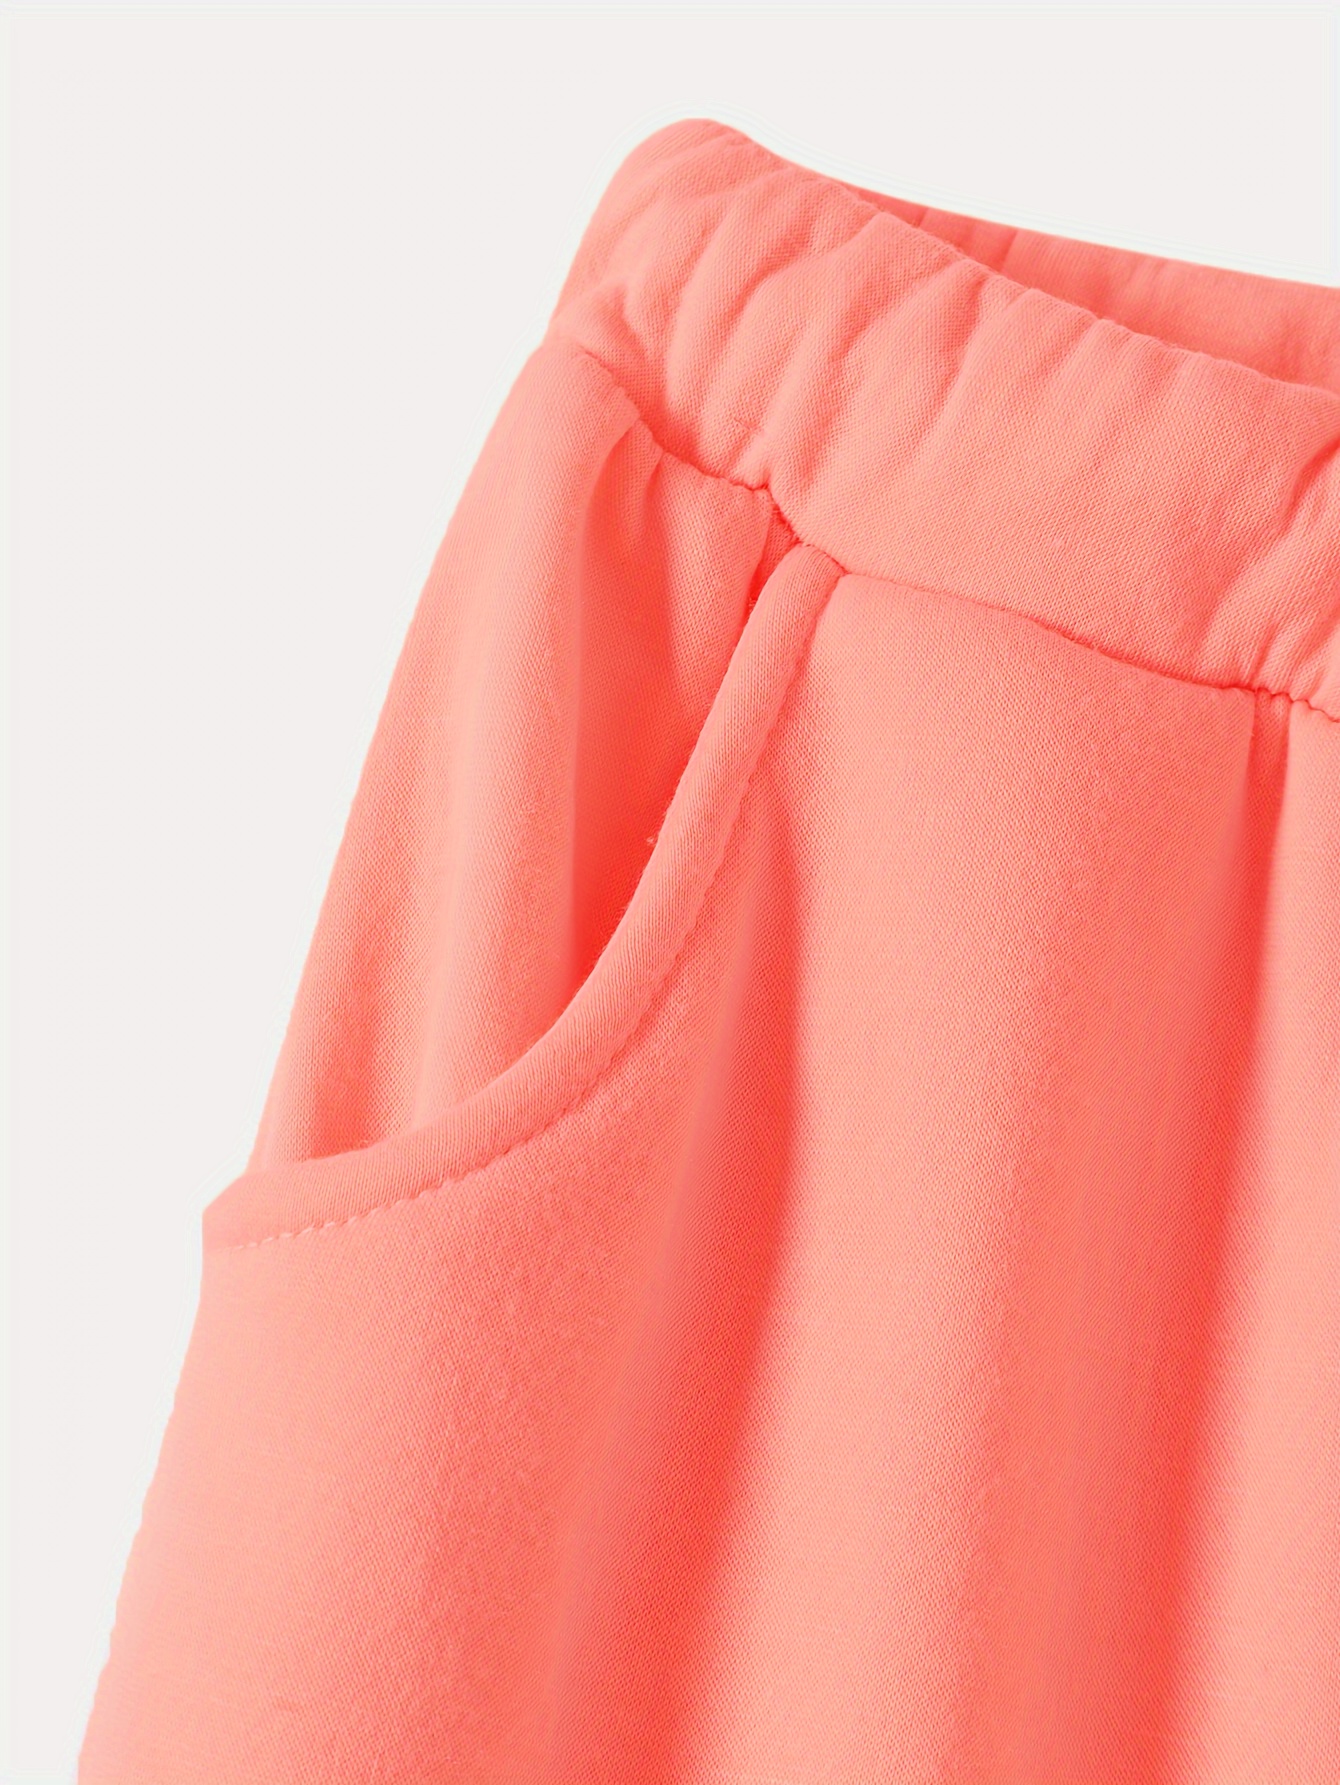 solid drawstring thermal sweatpants versatile loose comfy jogger pants womens clothing details 42